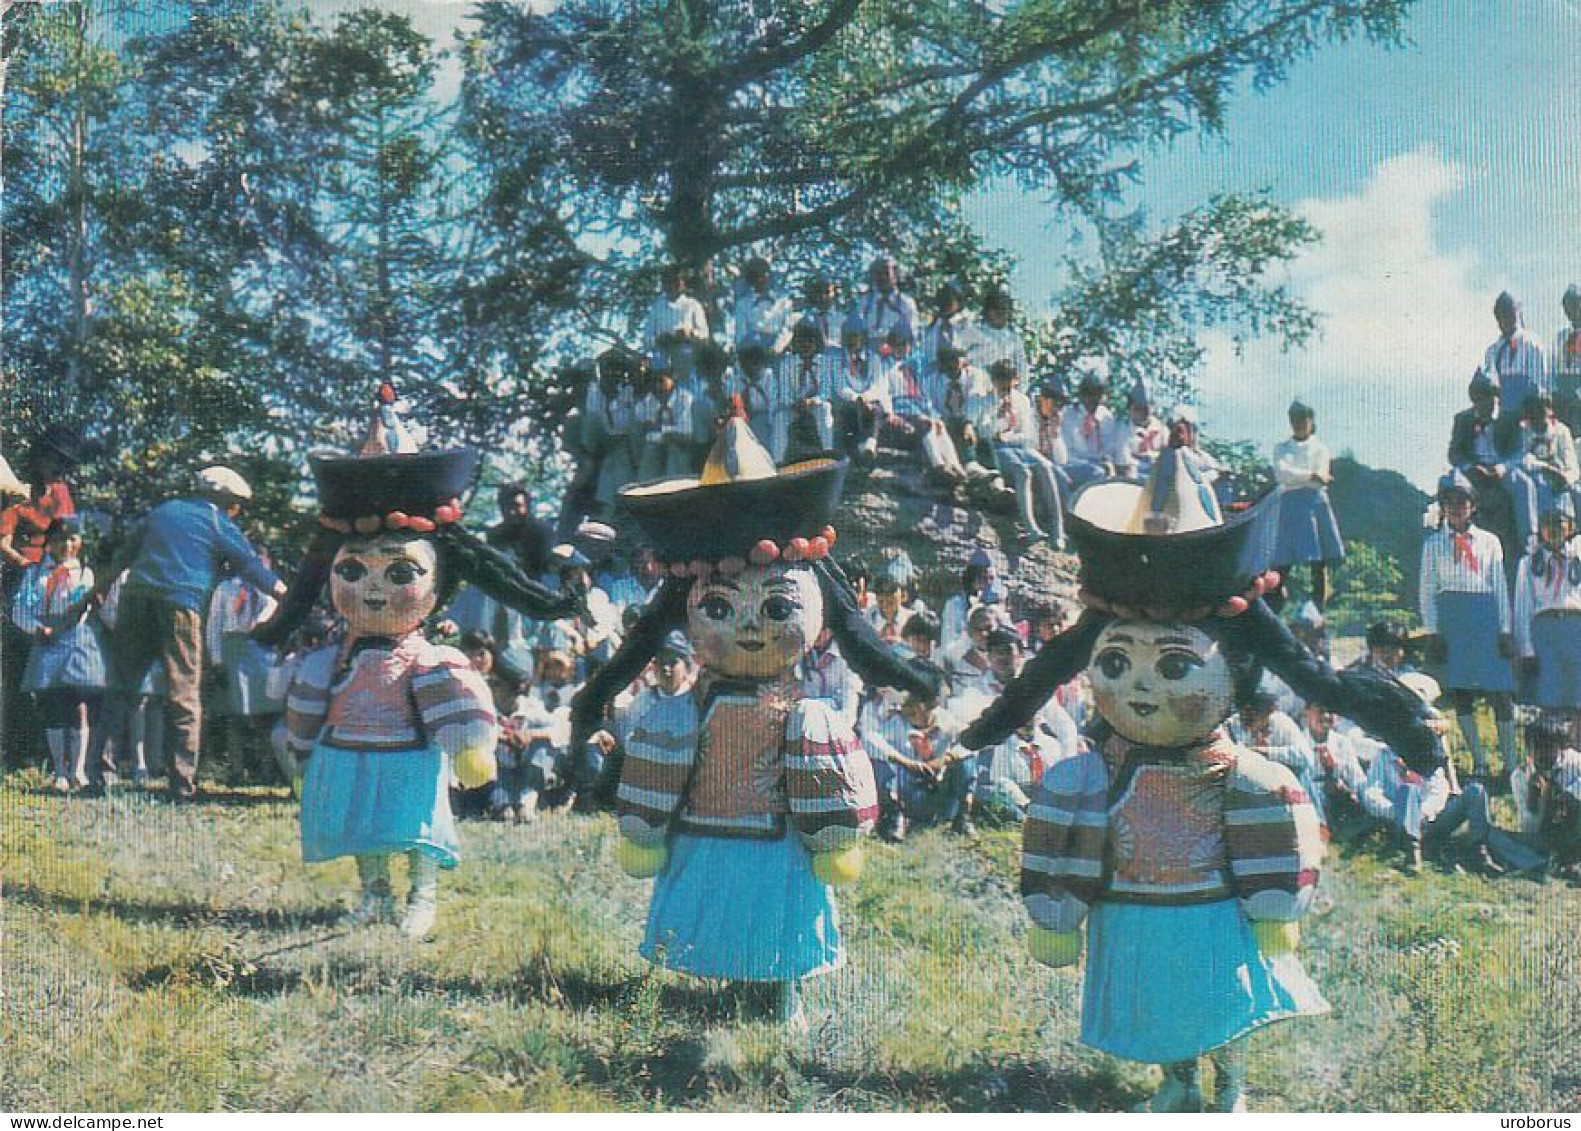 MONGOLIA - Puppet Dance 1990 - Hockey USSR Stamp - Mongolia